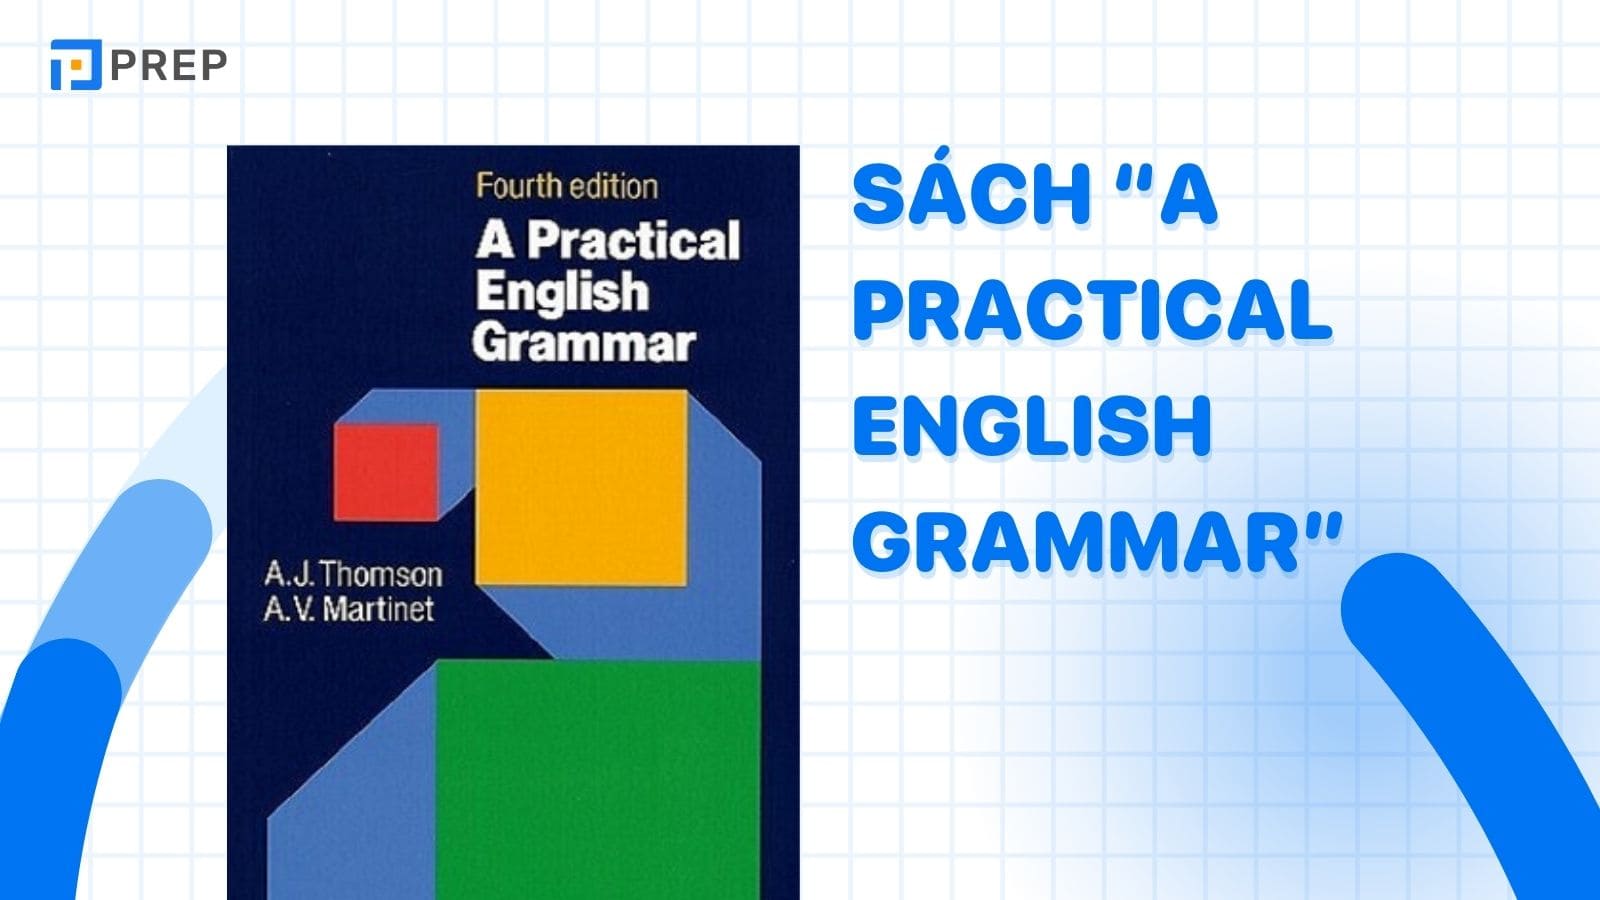 a-practical-english-grammar.jpg